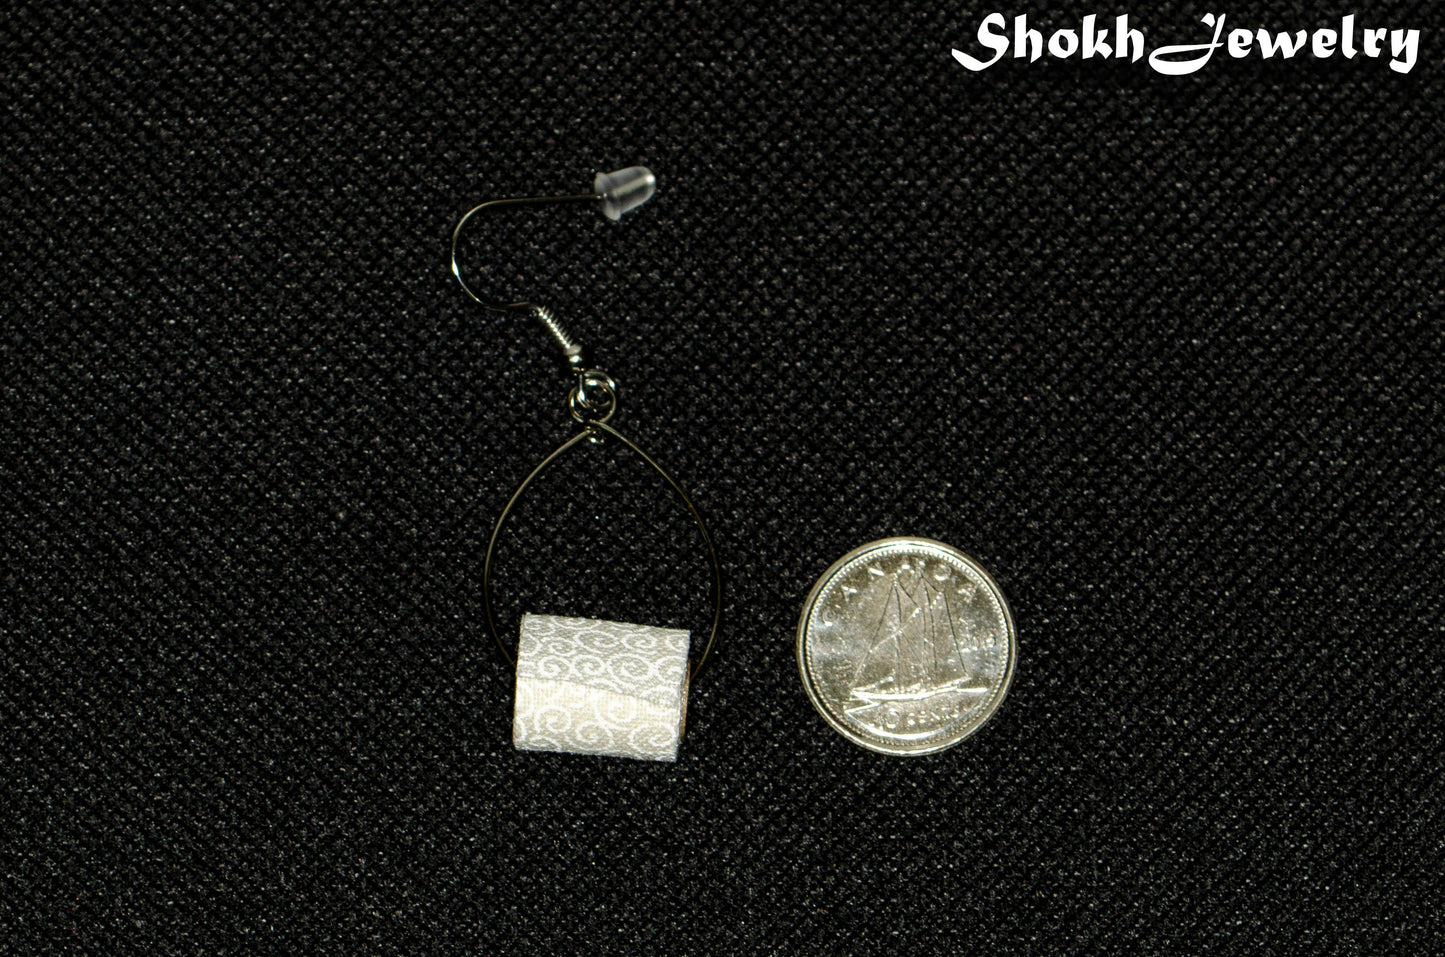 Miniature Toilet Paper Roll Earring beside a dime.